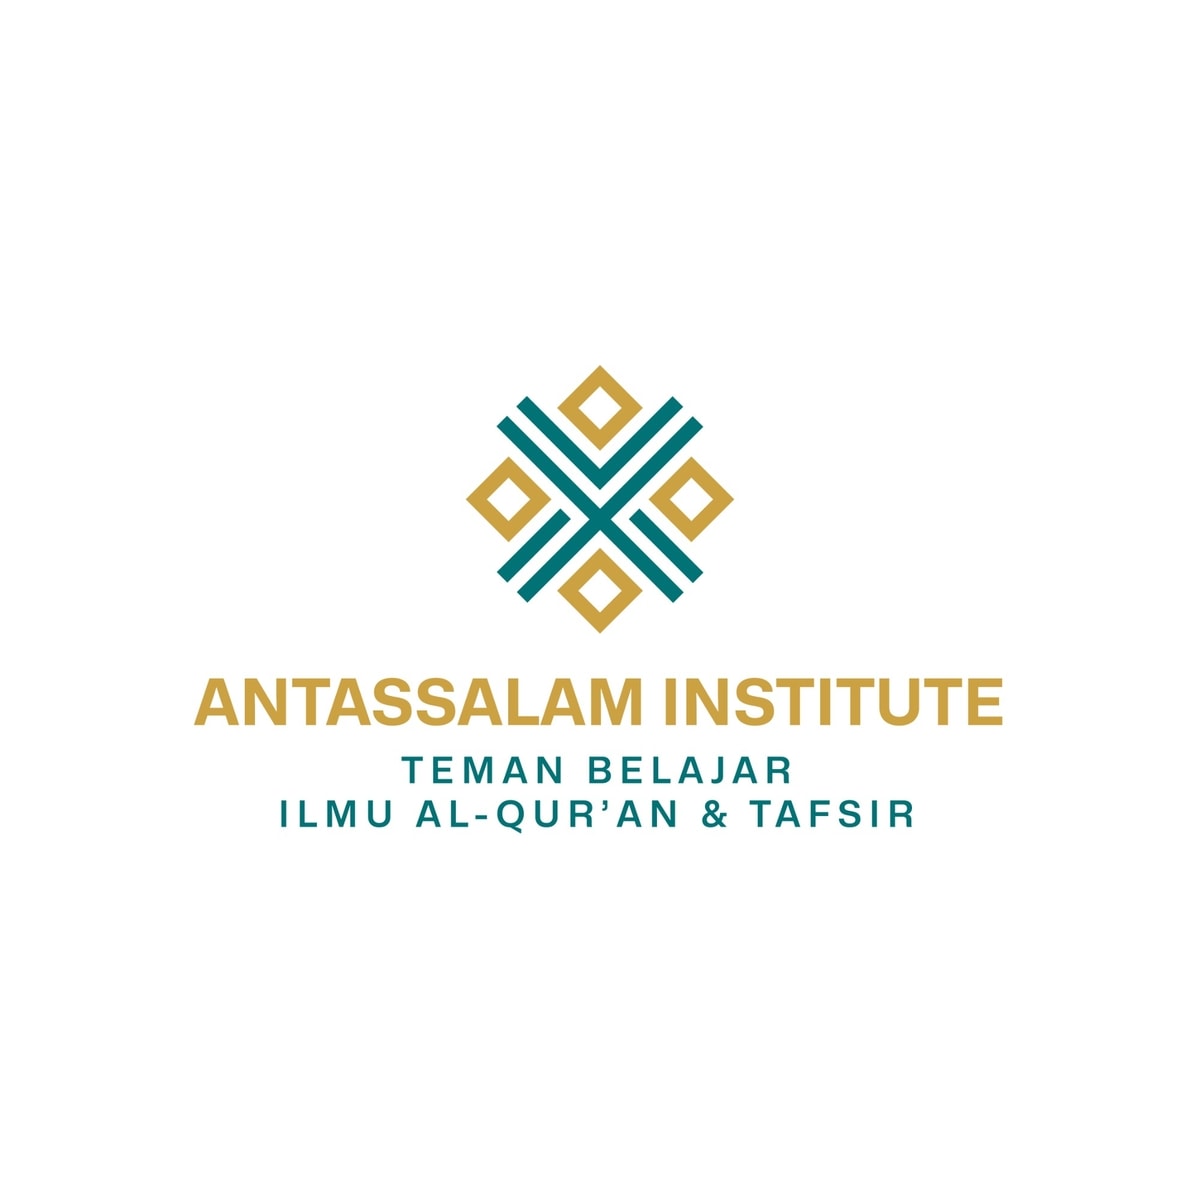 Tentang Yayasan Antassalam